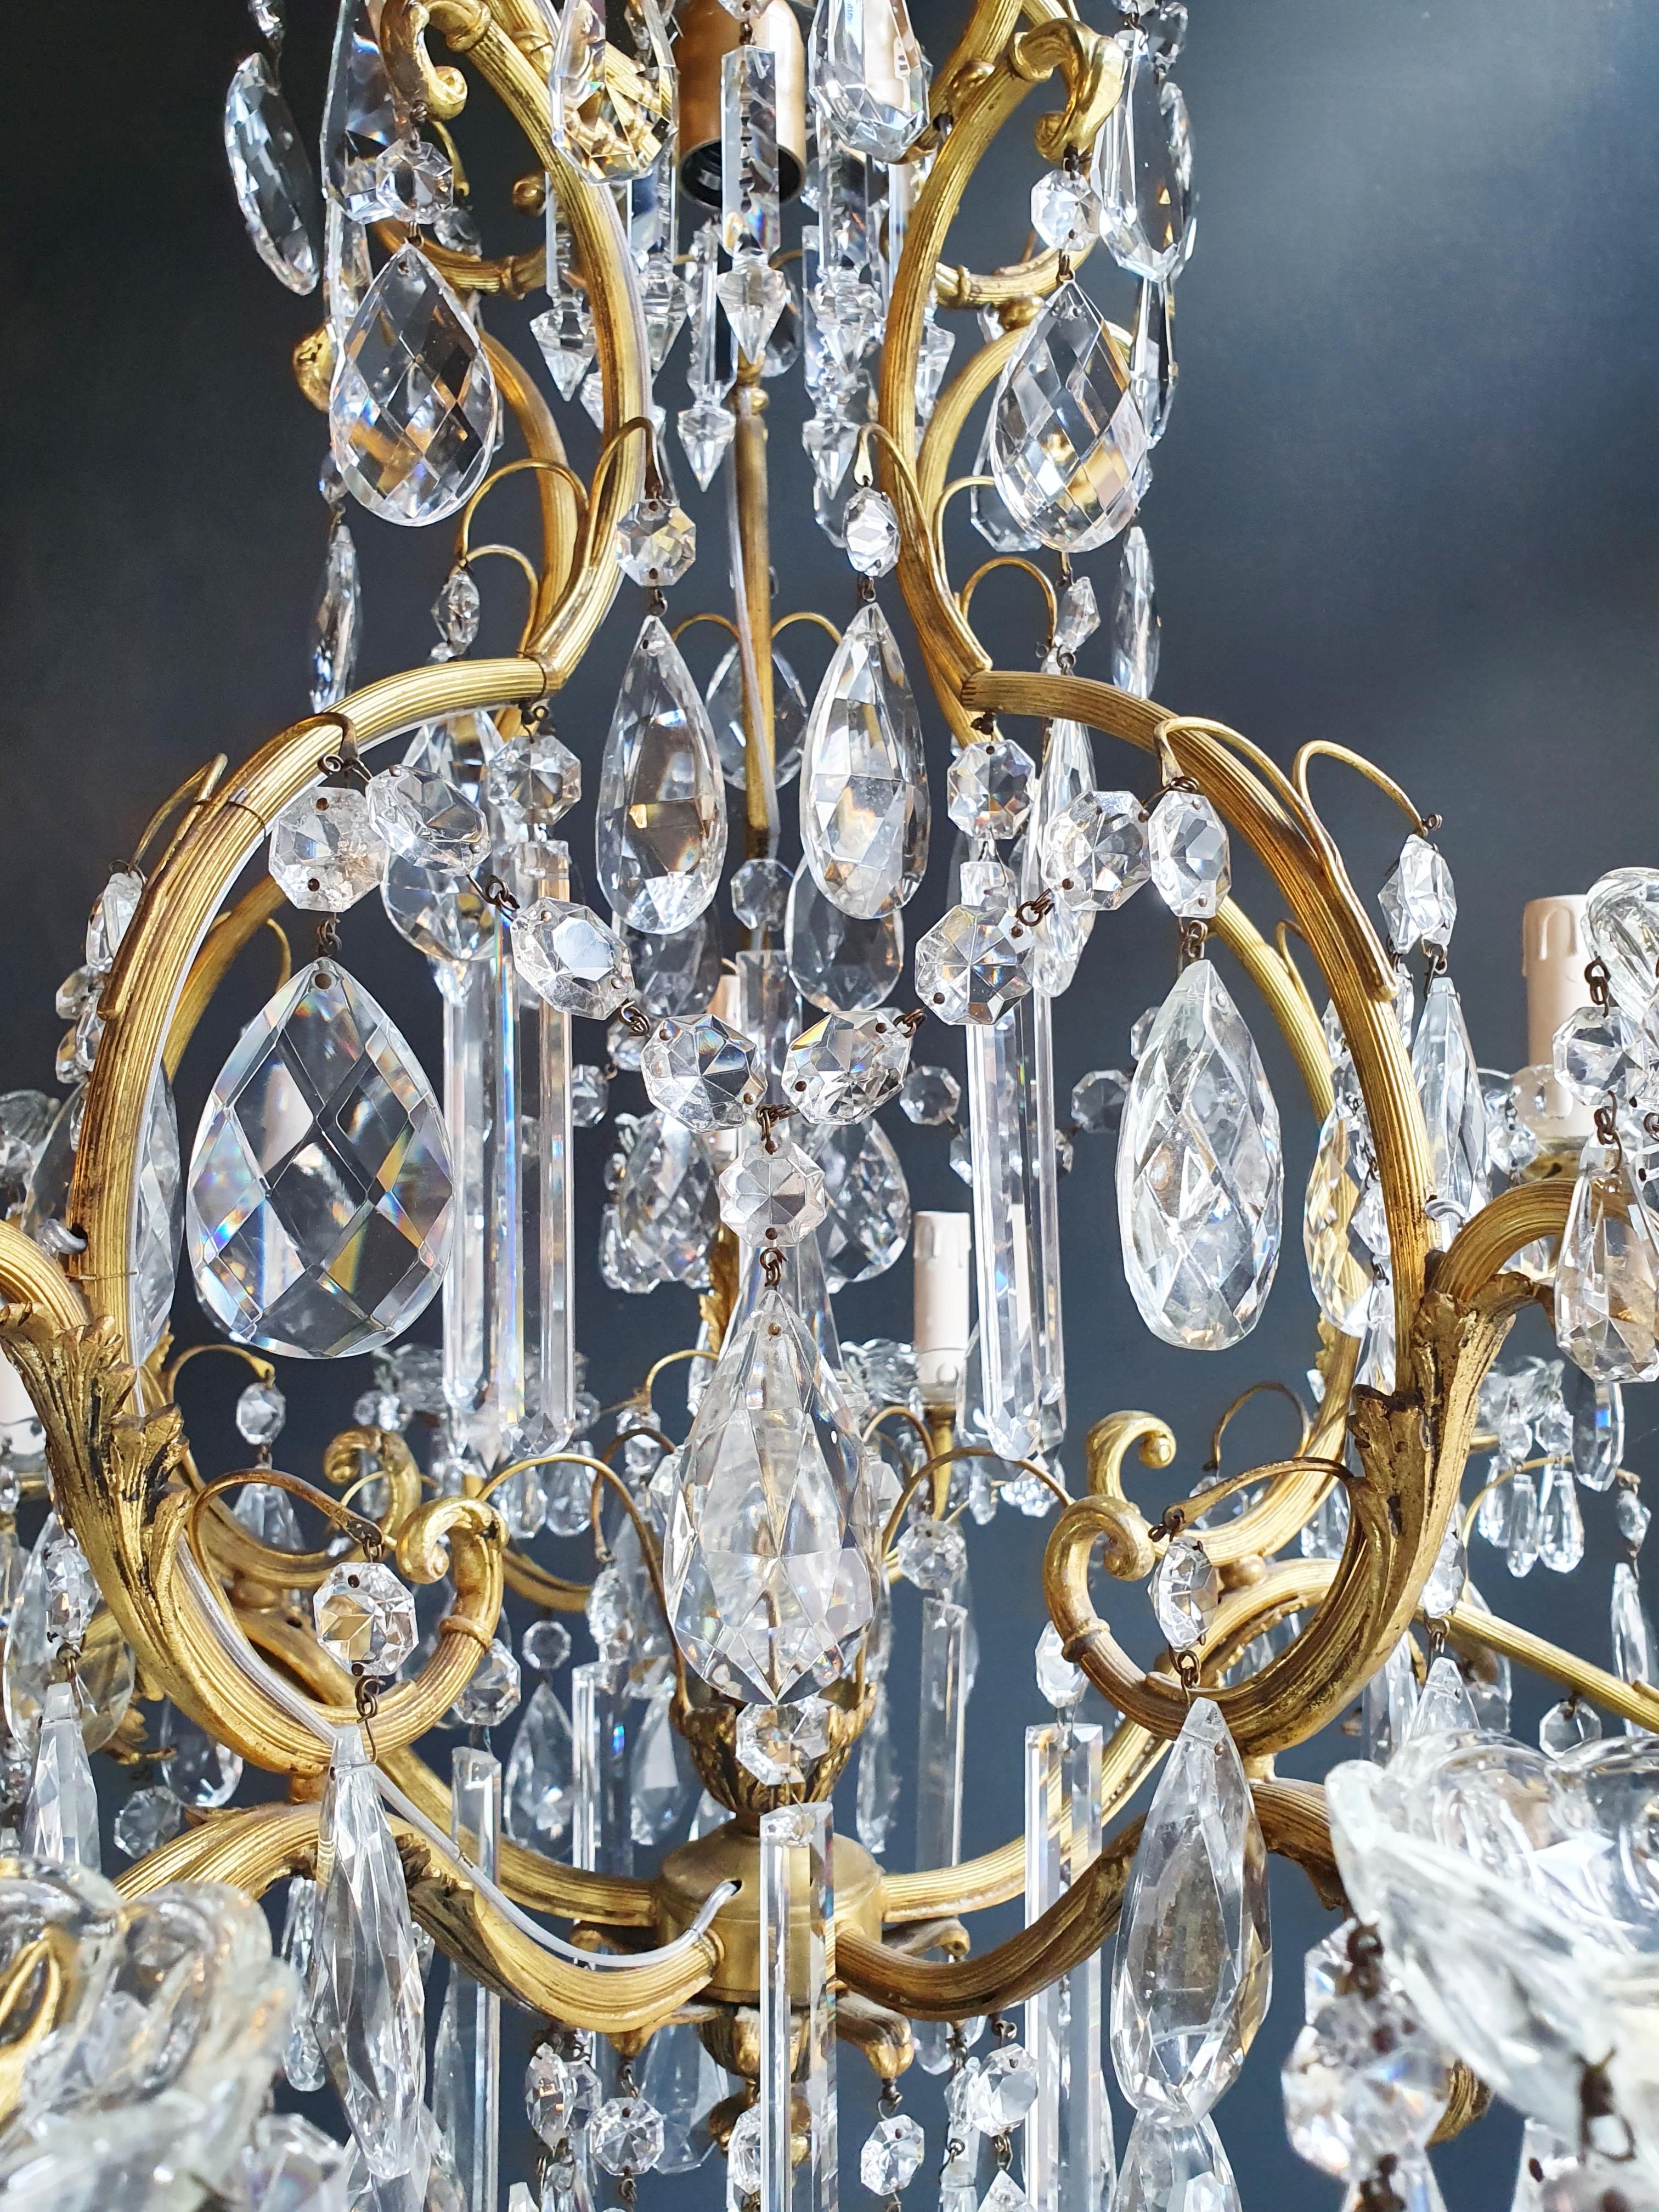 Brass Crystal Chandelier Antique Ceiling Lamp Lustre Art Nouveau Lamp In Good Condition For Sale In Berlin, DE